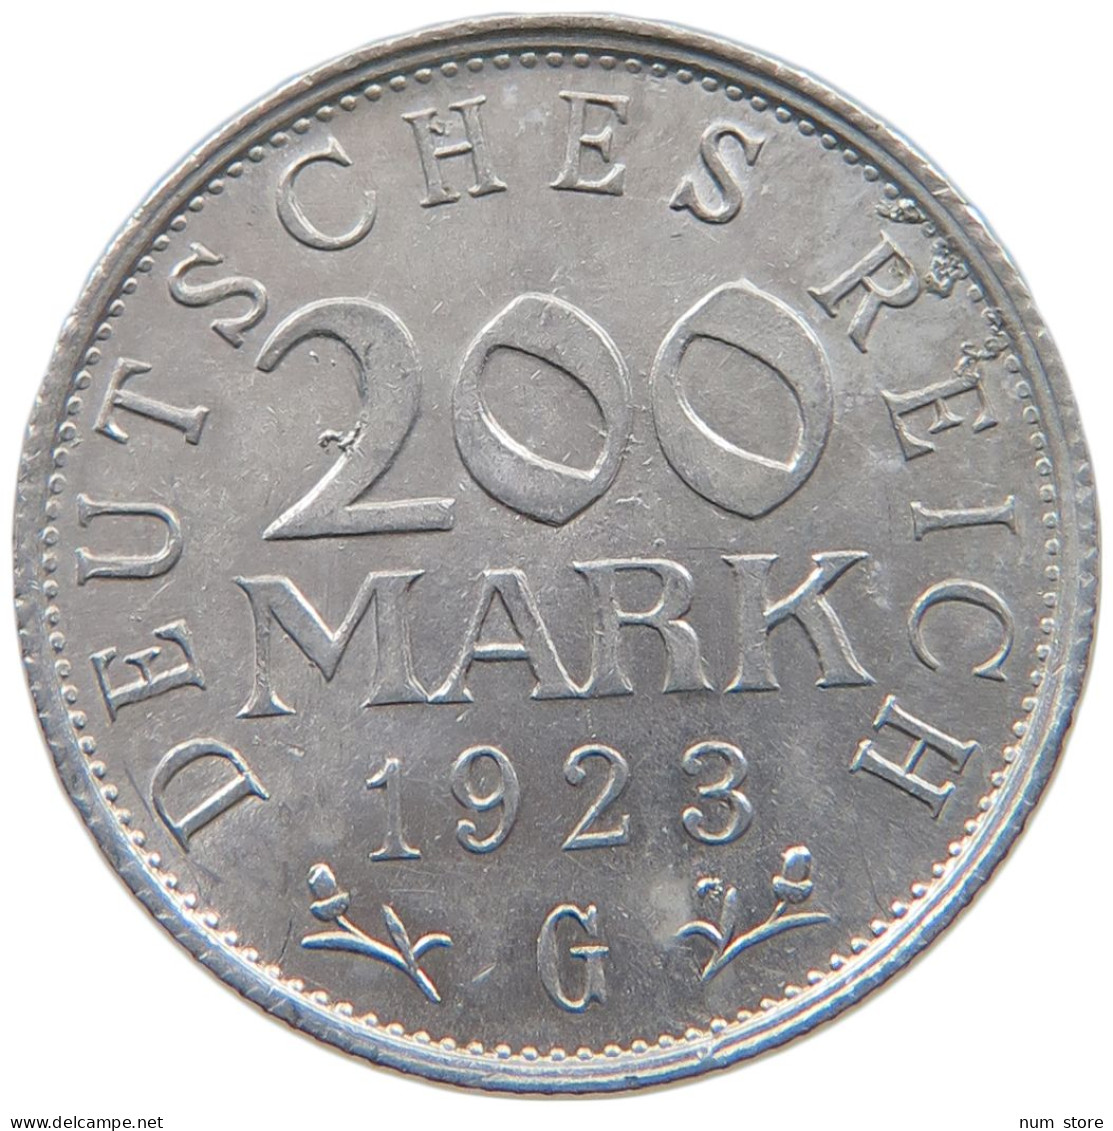 WEIMARER REPUBLIK 200 MARK 1923 G  #a051 0331 - 200 & 500 Mark